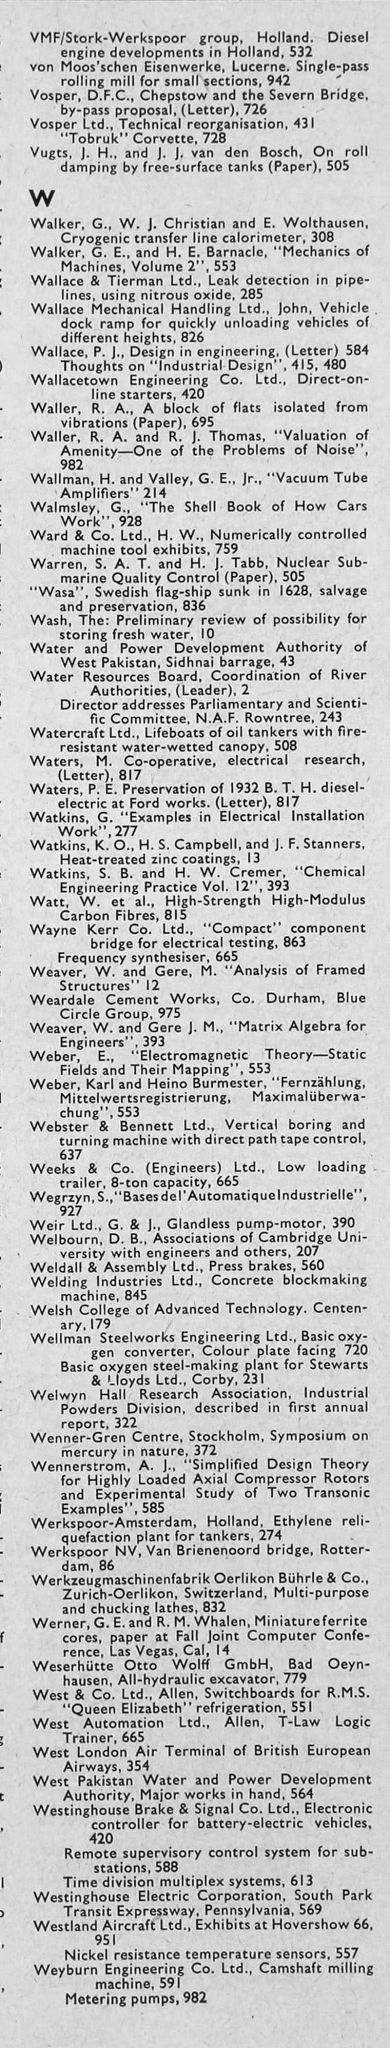 Ssat Analogies Worksheet or the Engineer 1966 Jan Jun Index